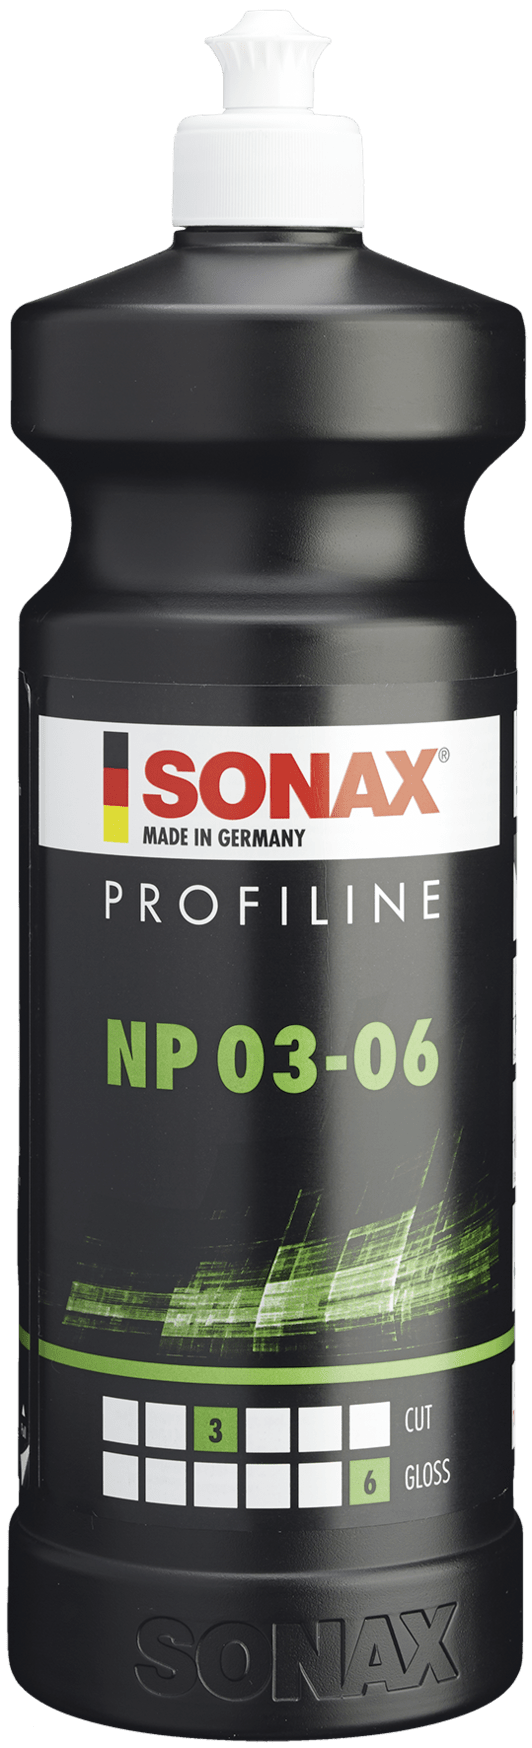 SONAX Profiline poliravimo pasta NP 03-06, 1L